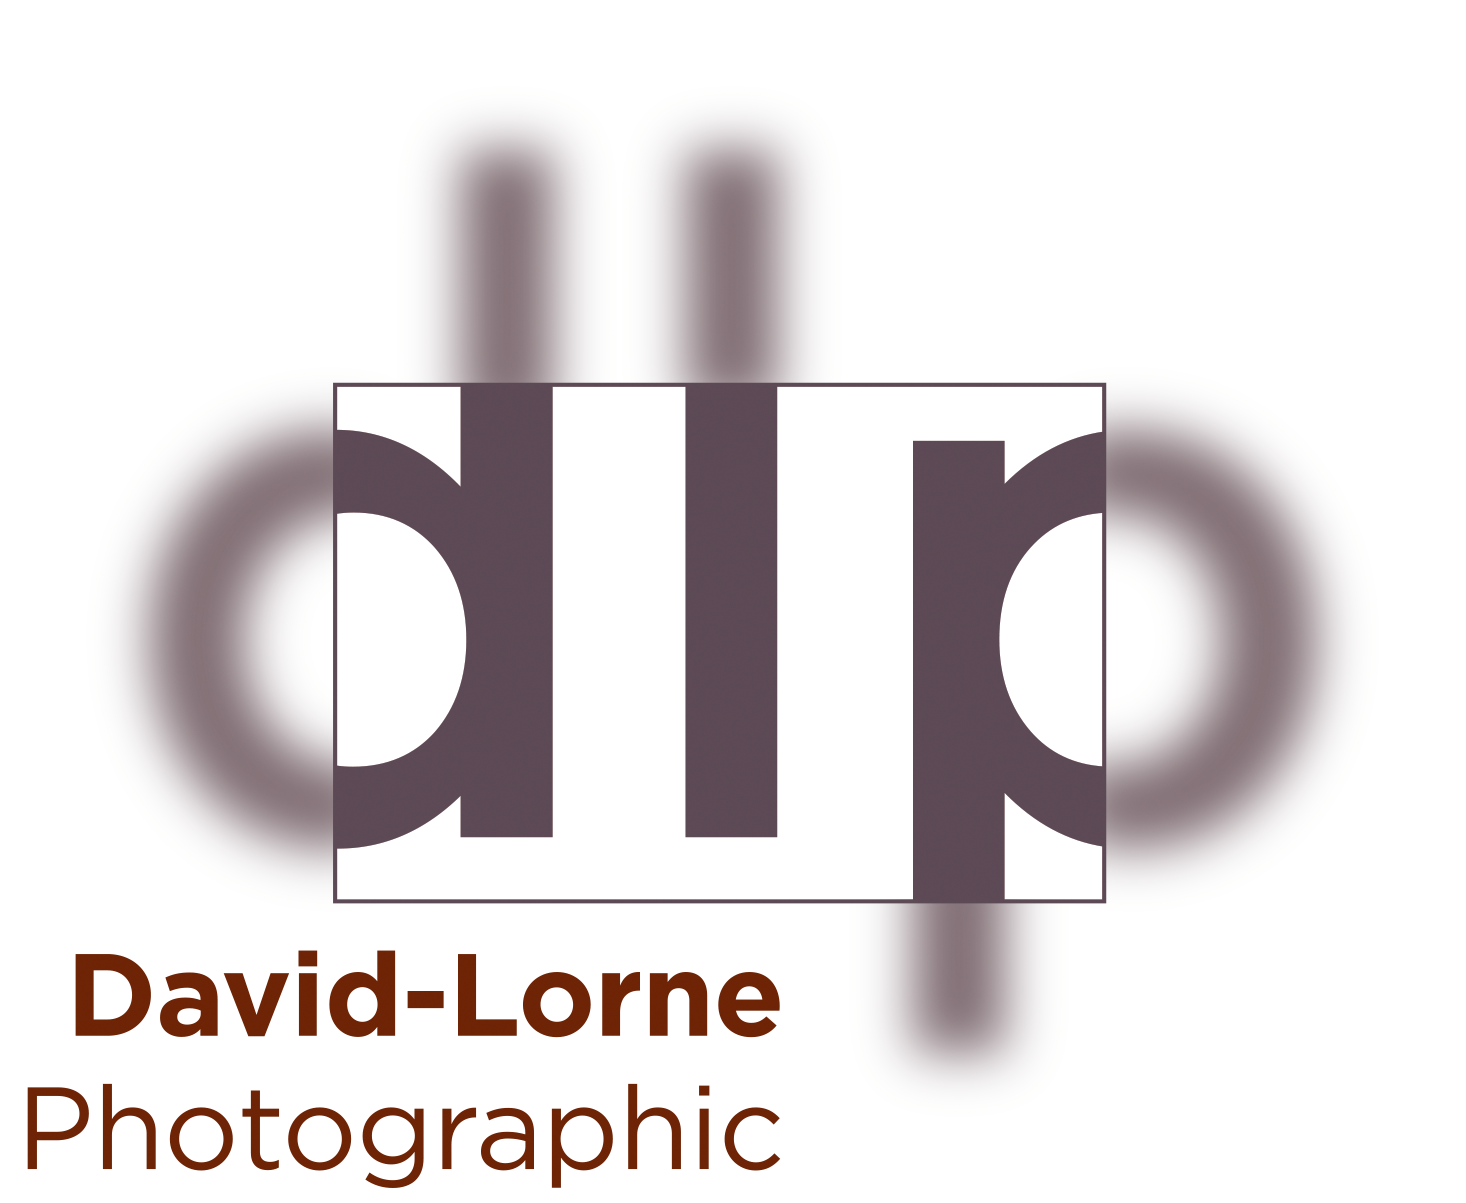 David-Lorne Photographic